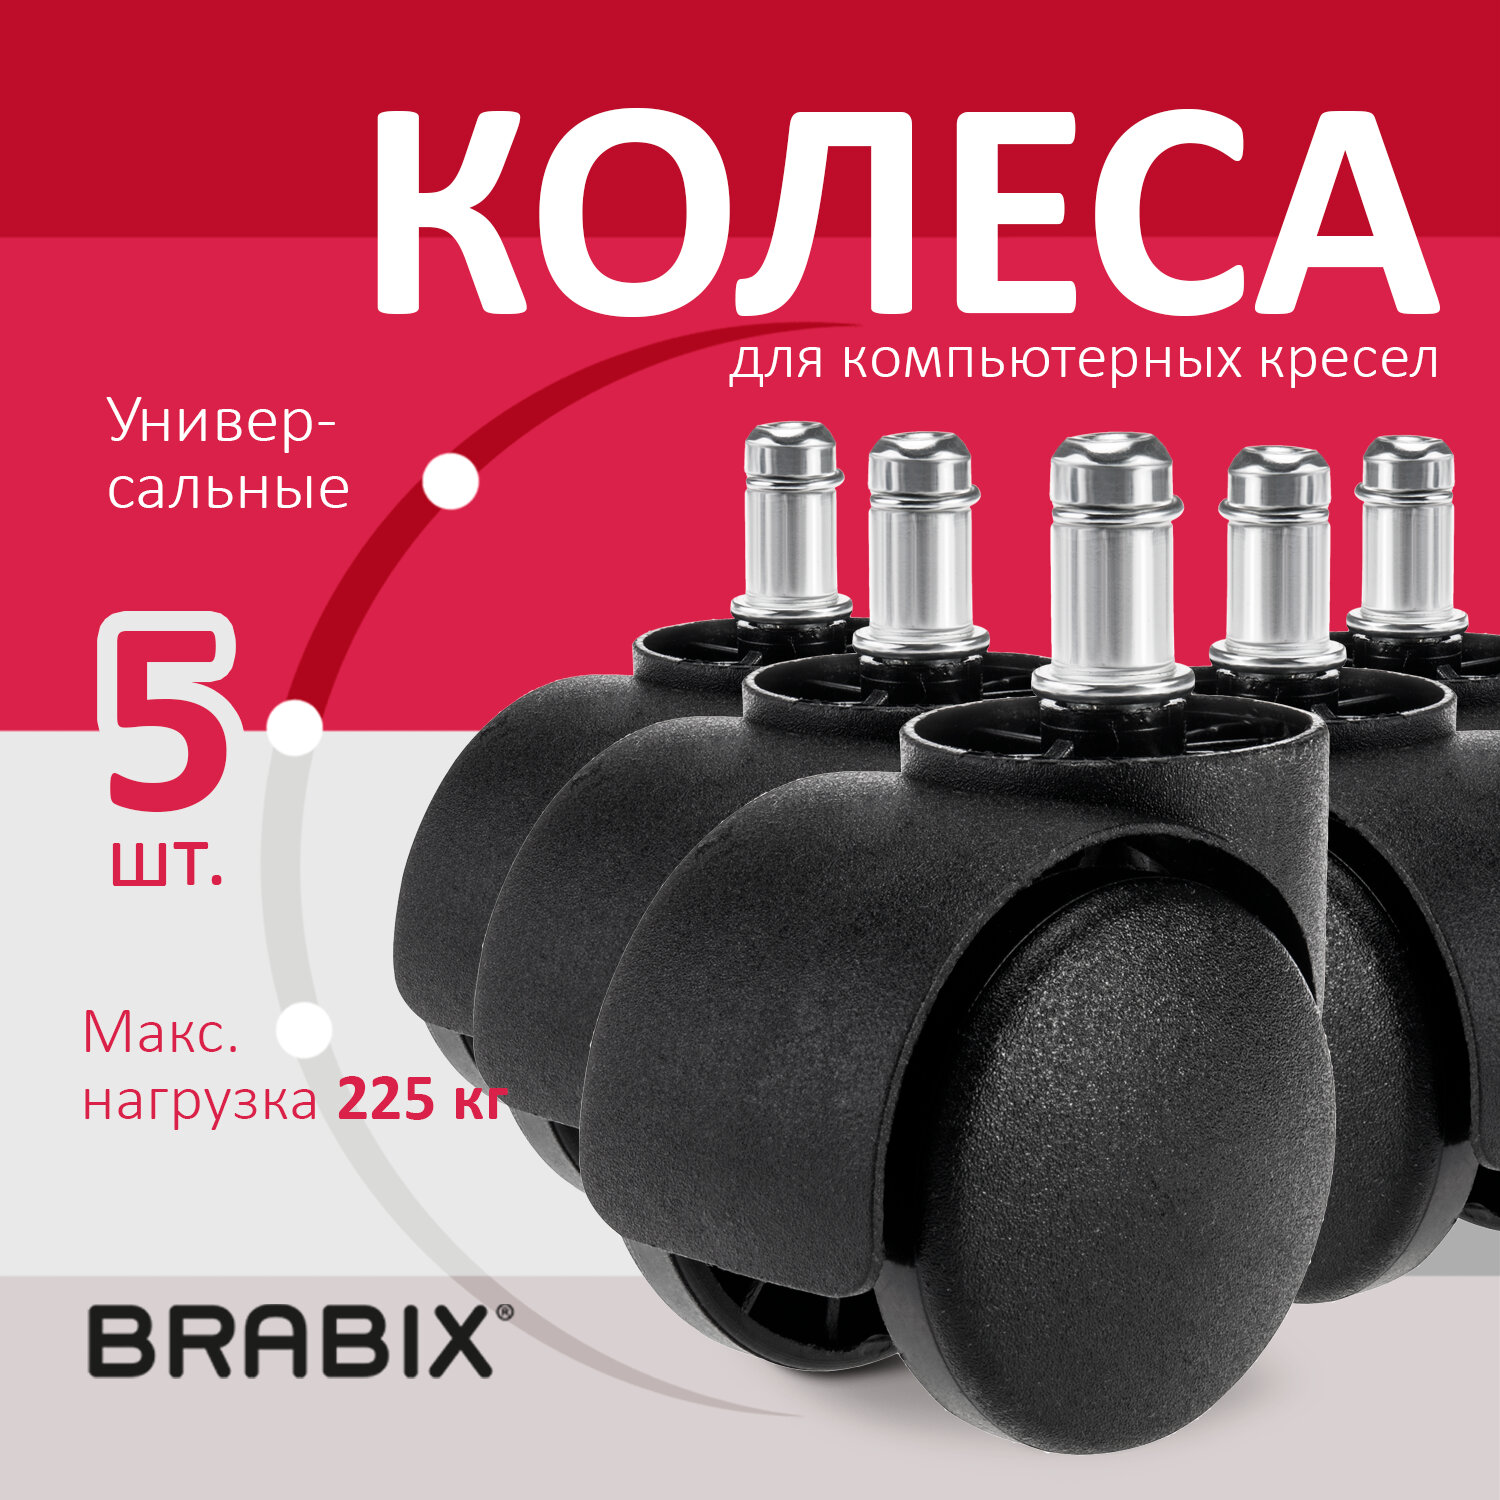 Brabix Колеса BRABIX 532008, комплект 2 упаковки по 5 штук